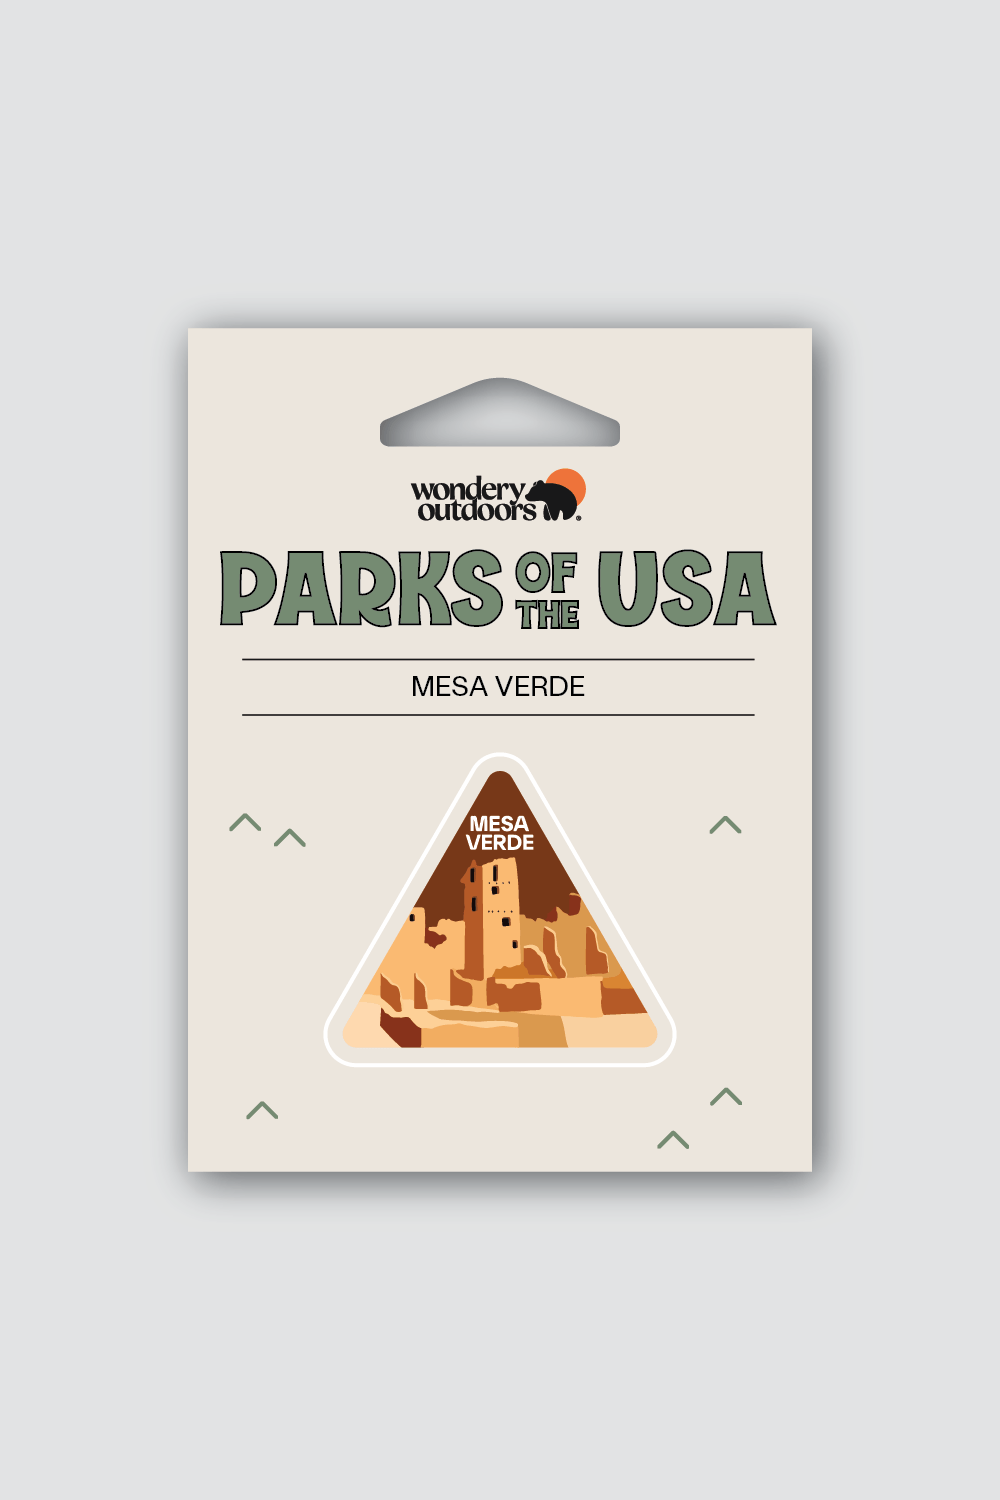 #national park_mesa verde _USA National Parks souvenir sticker gift sets